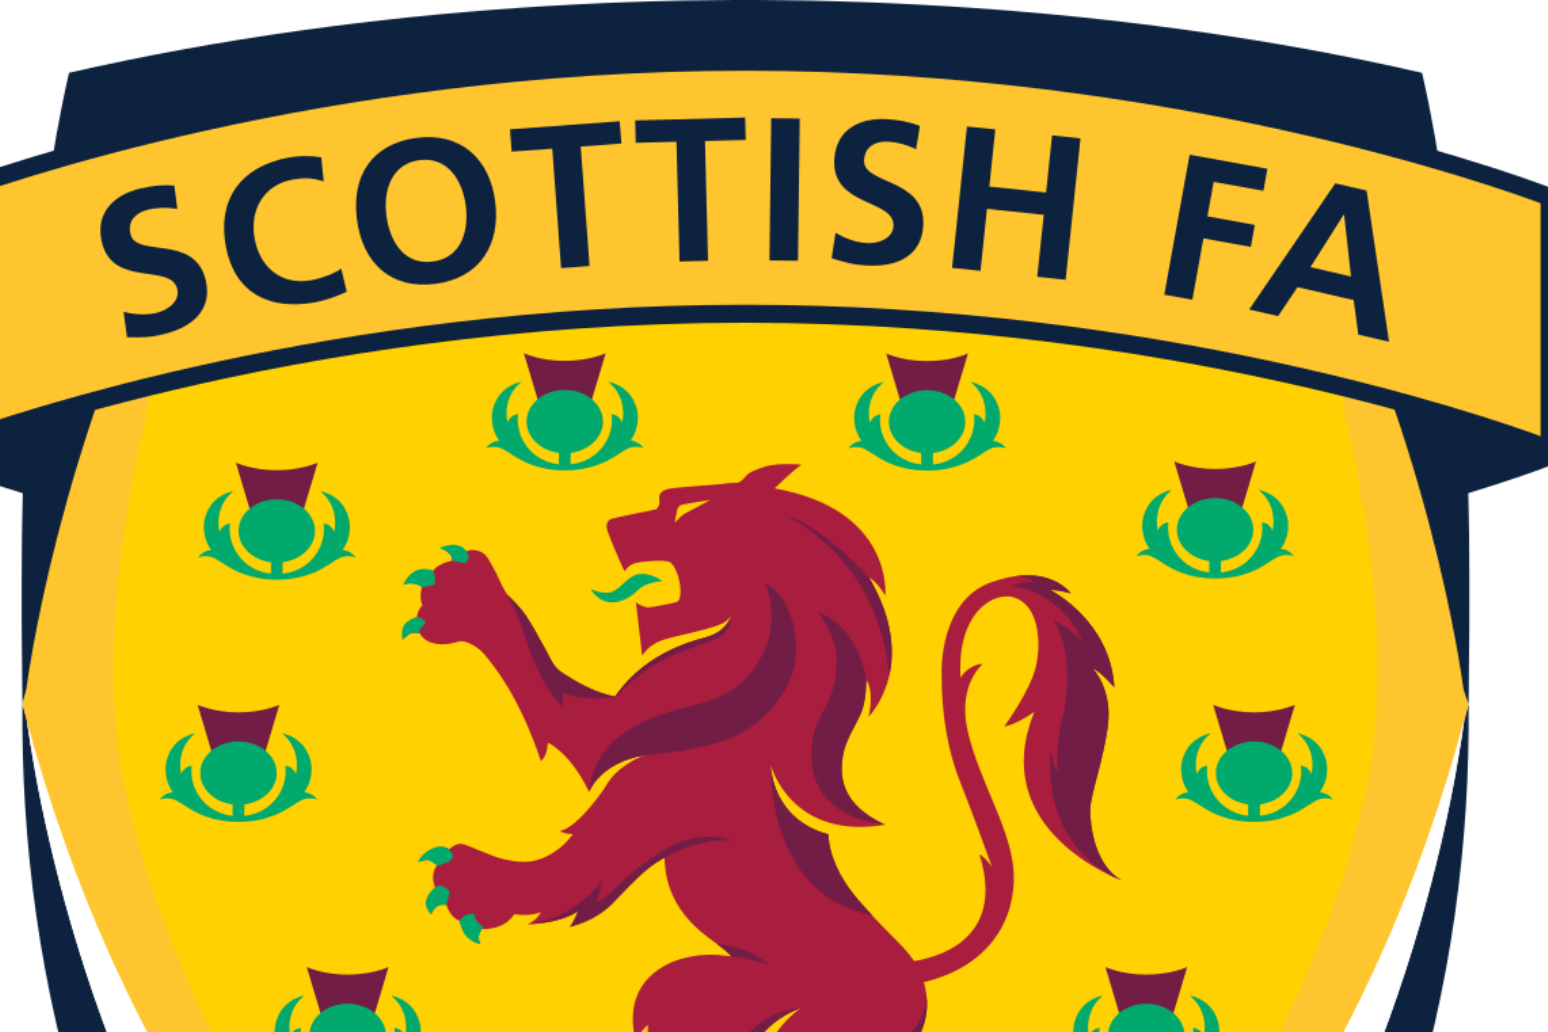 Scotland’s World Cup play-off semi-final against Ukraine postponed 